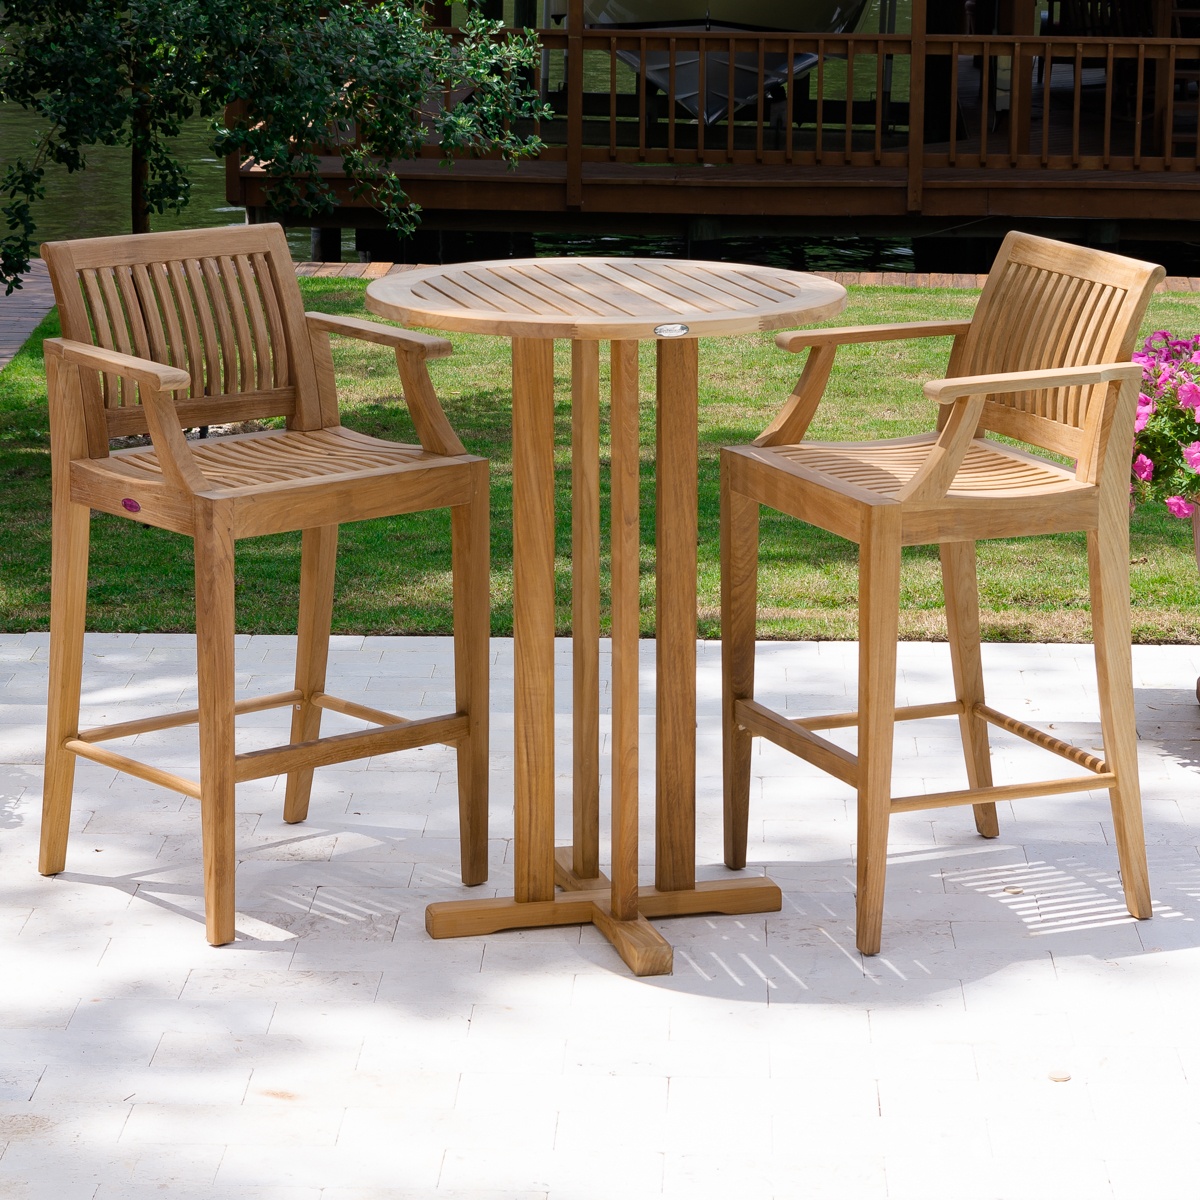 Teak Outdoor Chairs Furniture